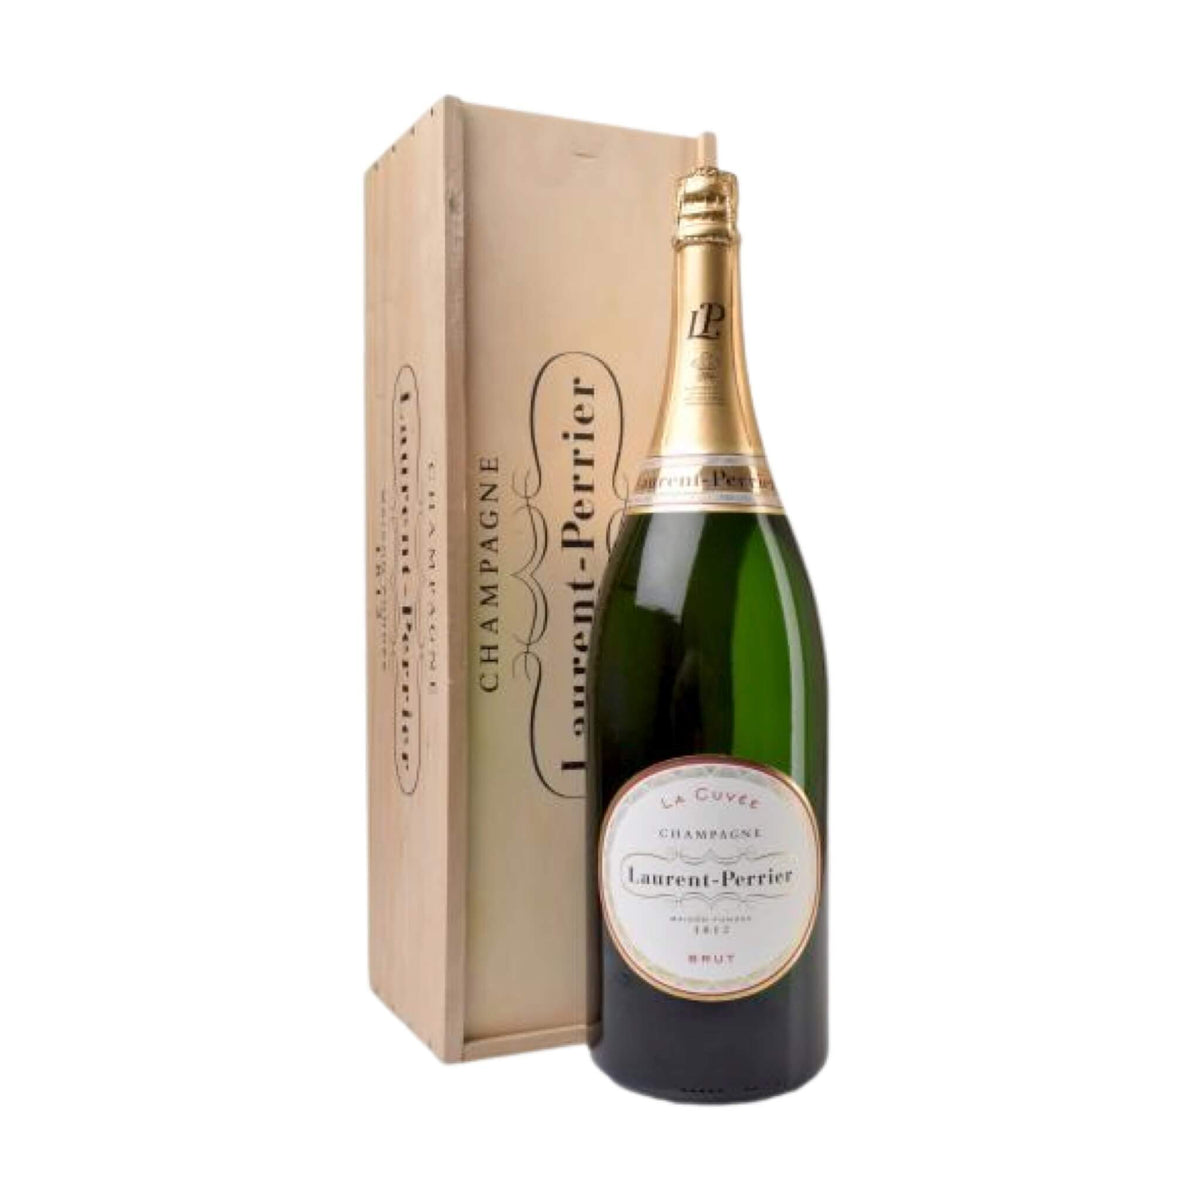 Champagne Laurent-Perrier - Brut Magnum | (3,0l) Champagne DMG AOC WINECOM